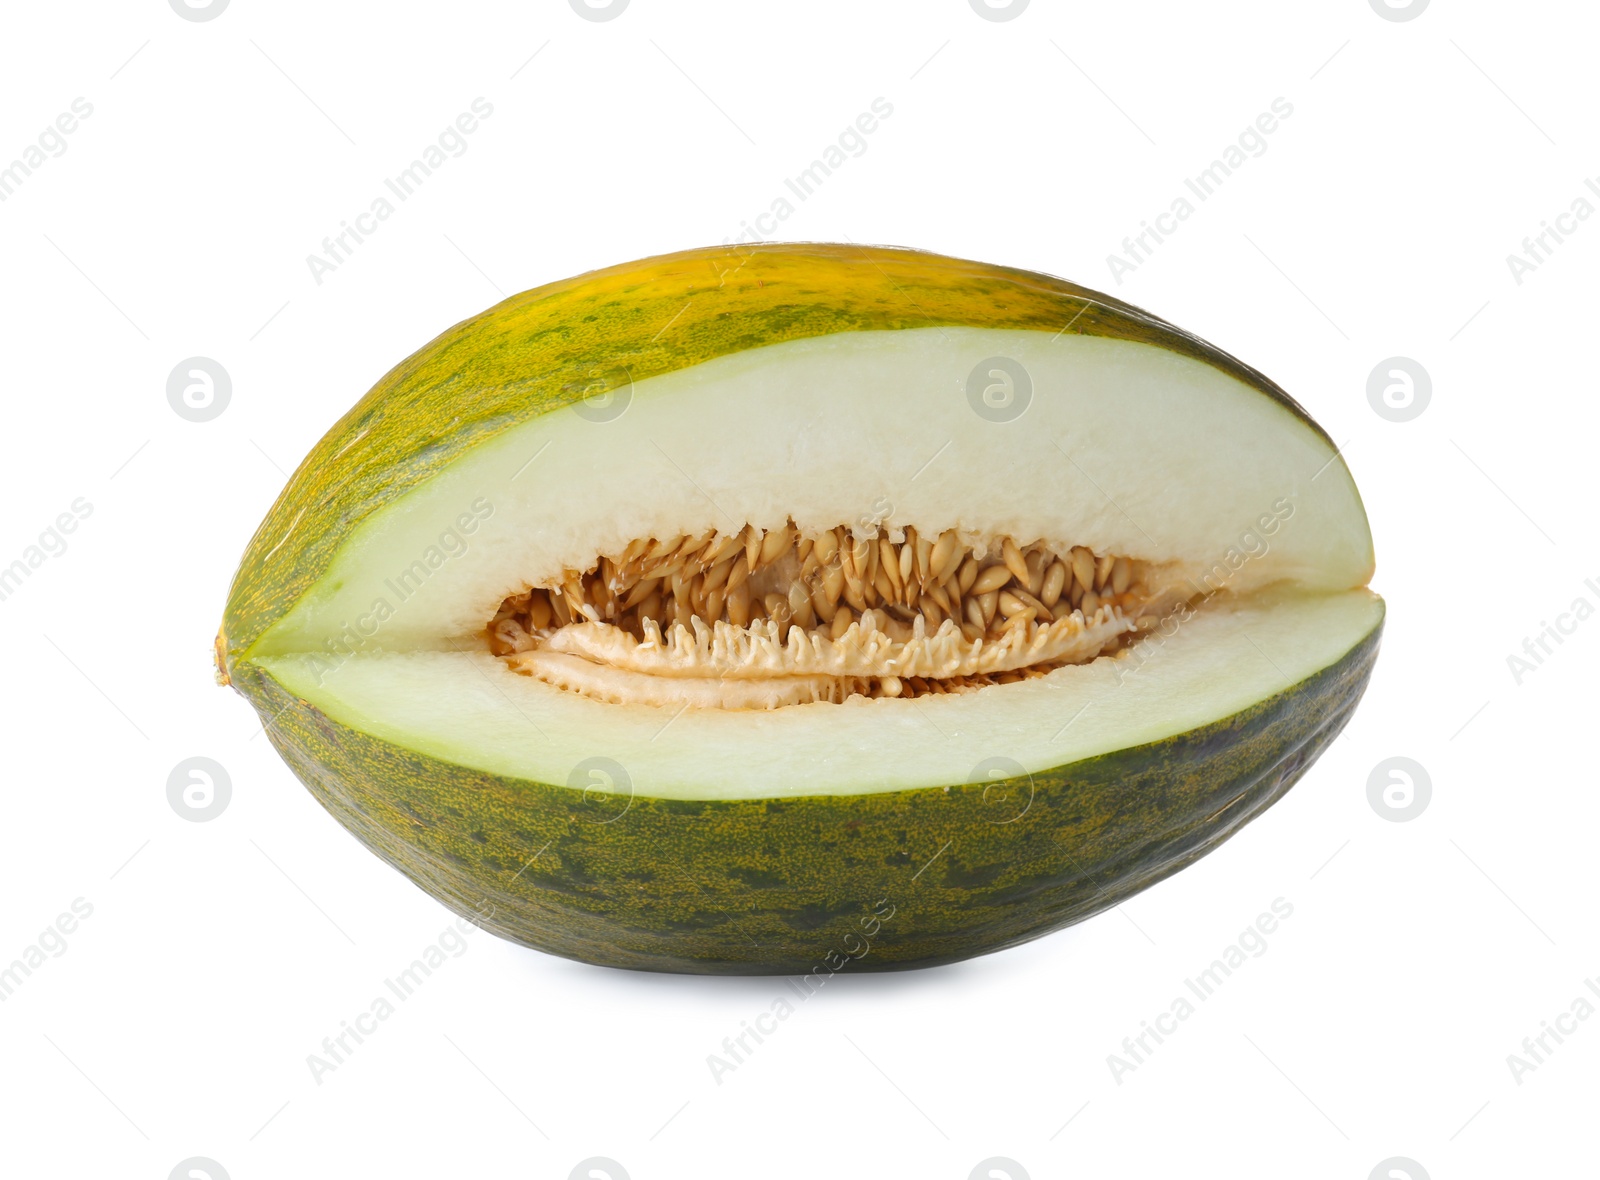 Photo of Sliced sweet fresh melon on white background